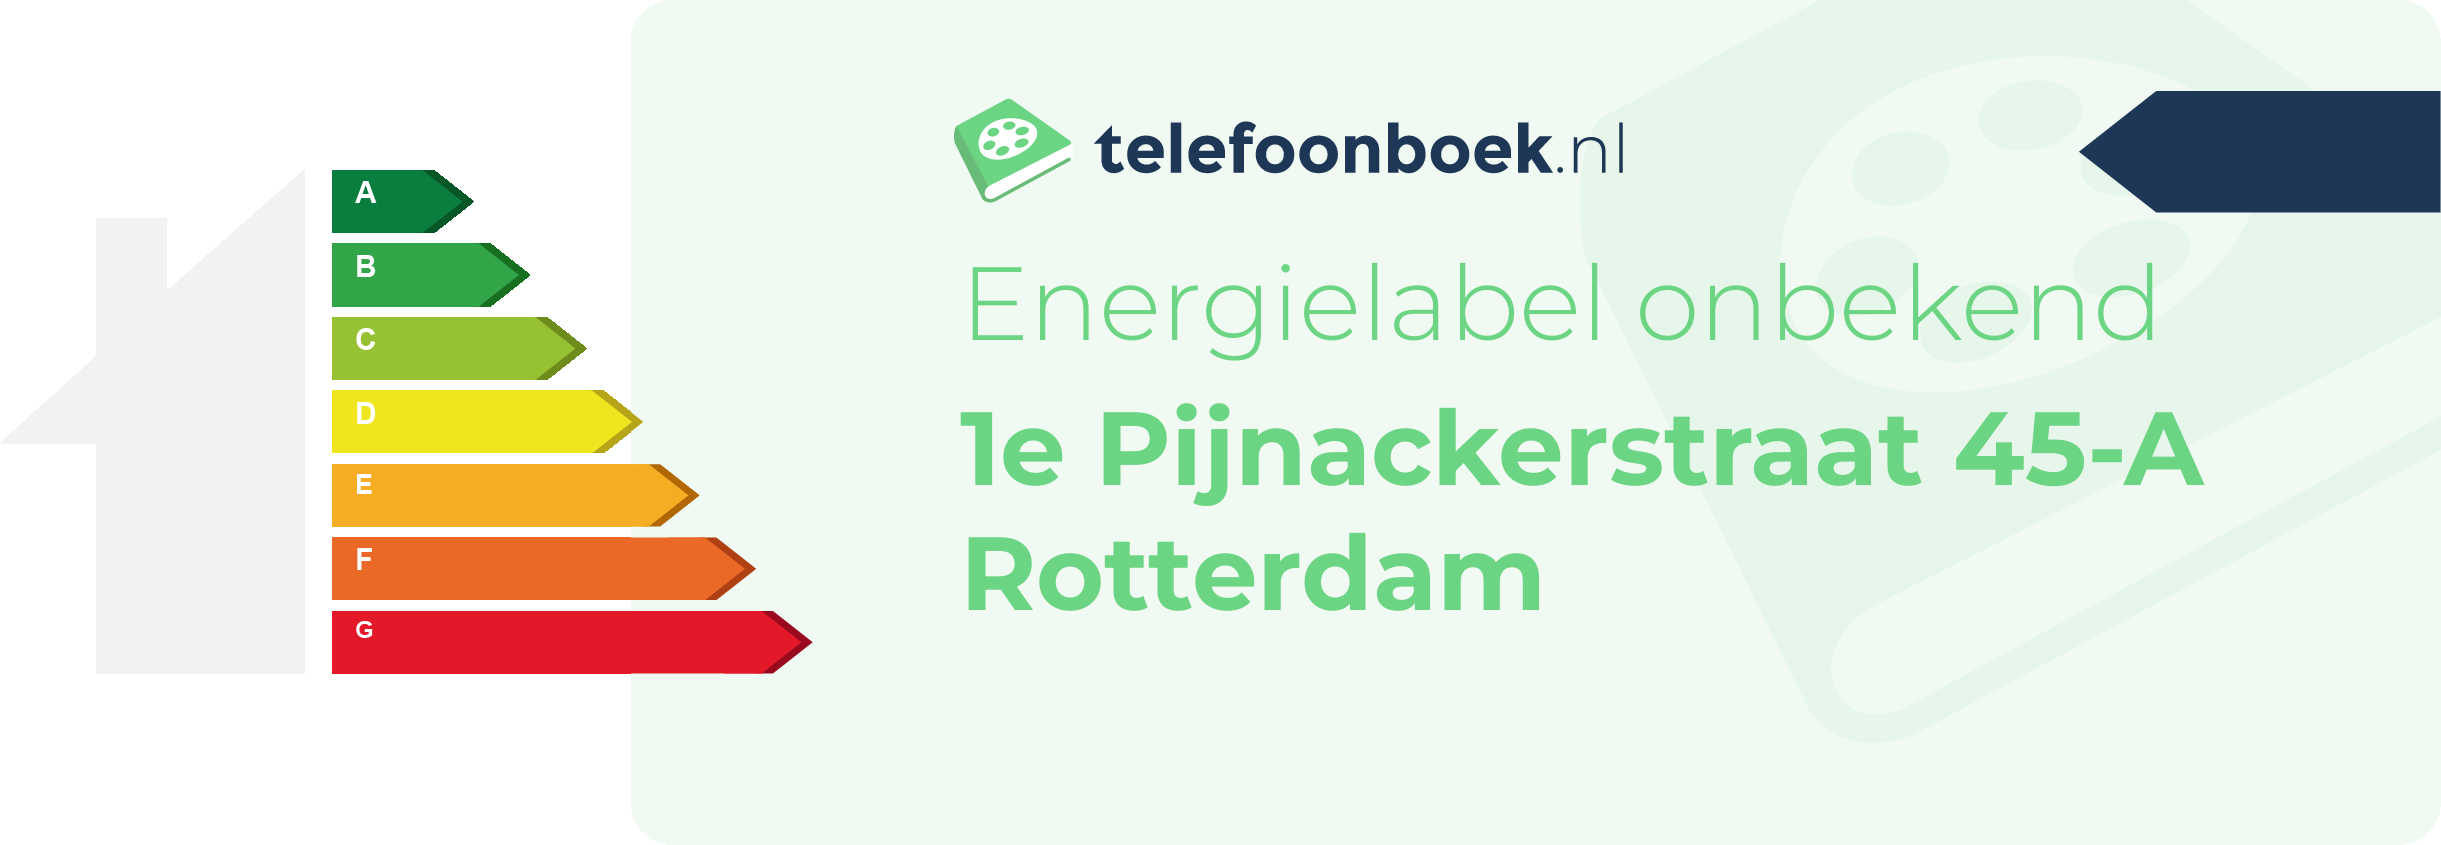 Energielabel 1e Pijnackerstraat 45-A Rotterdam